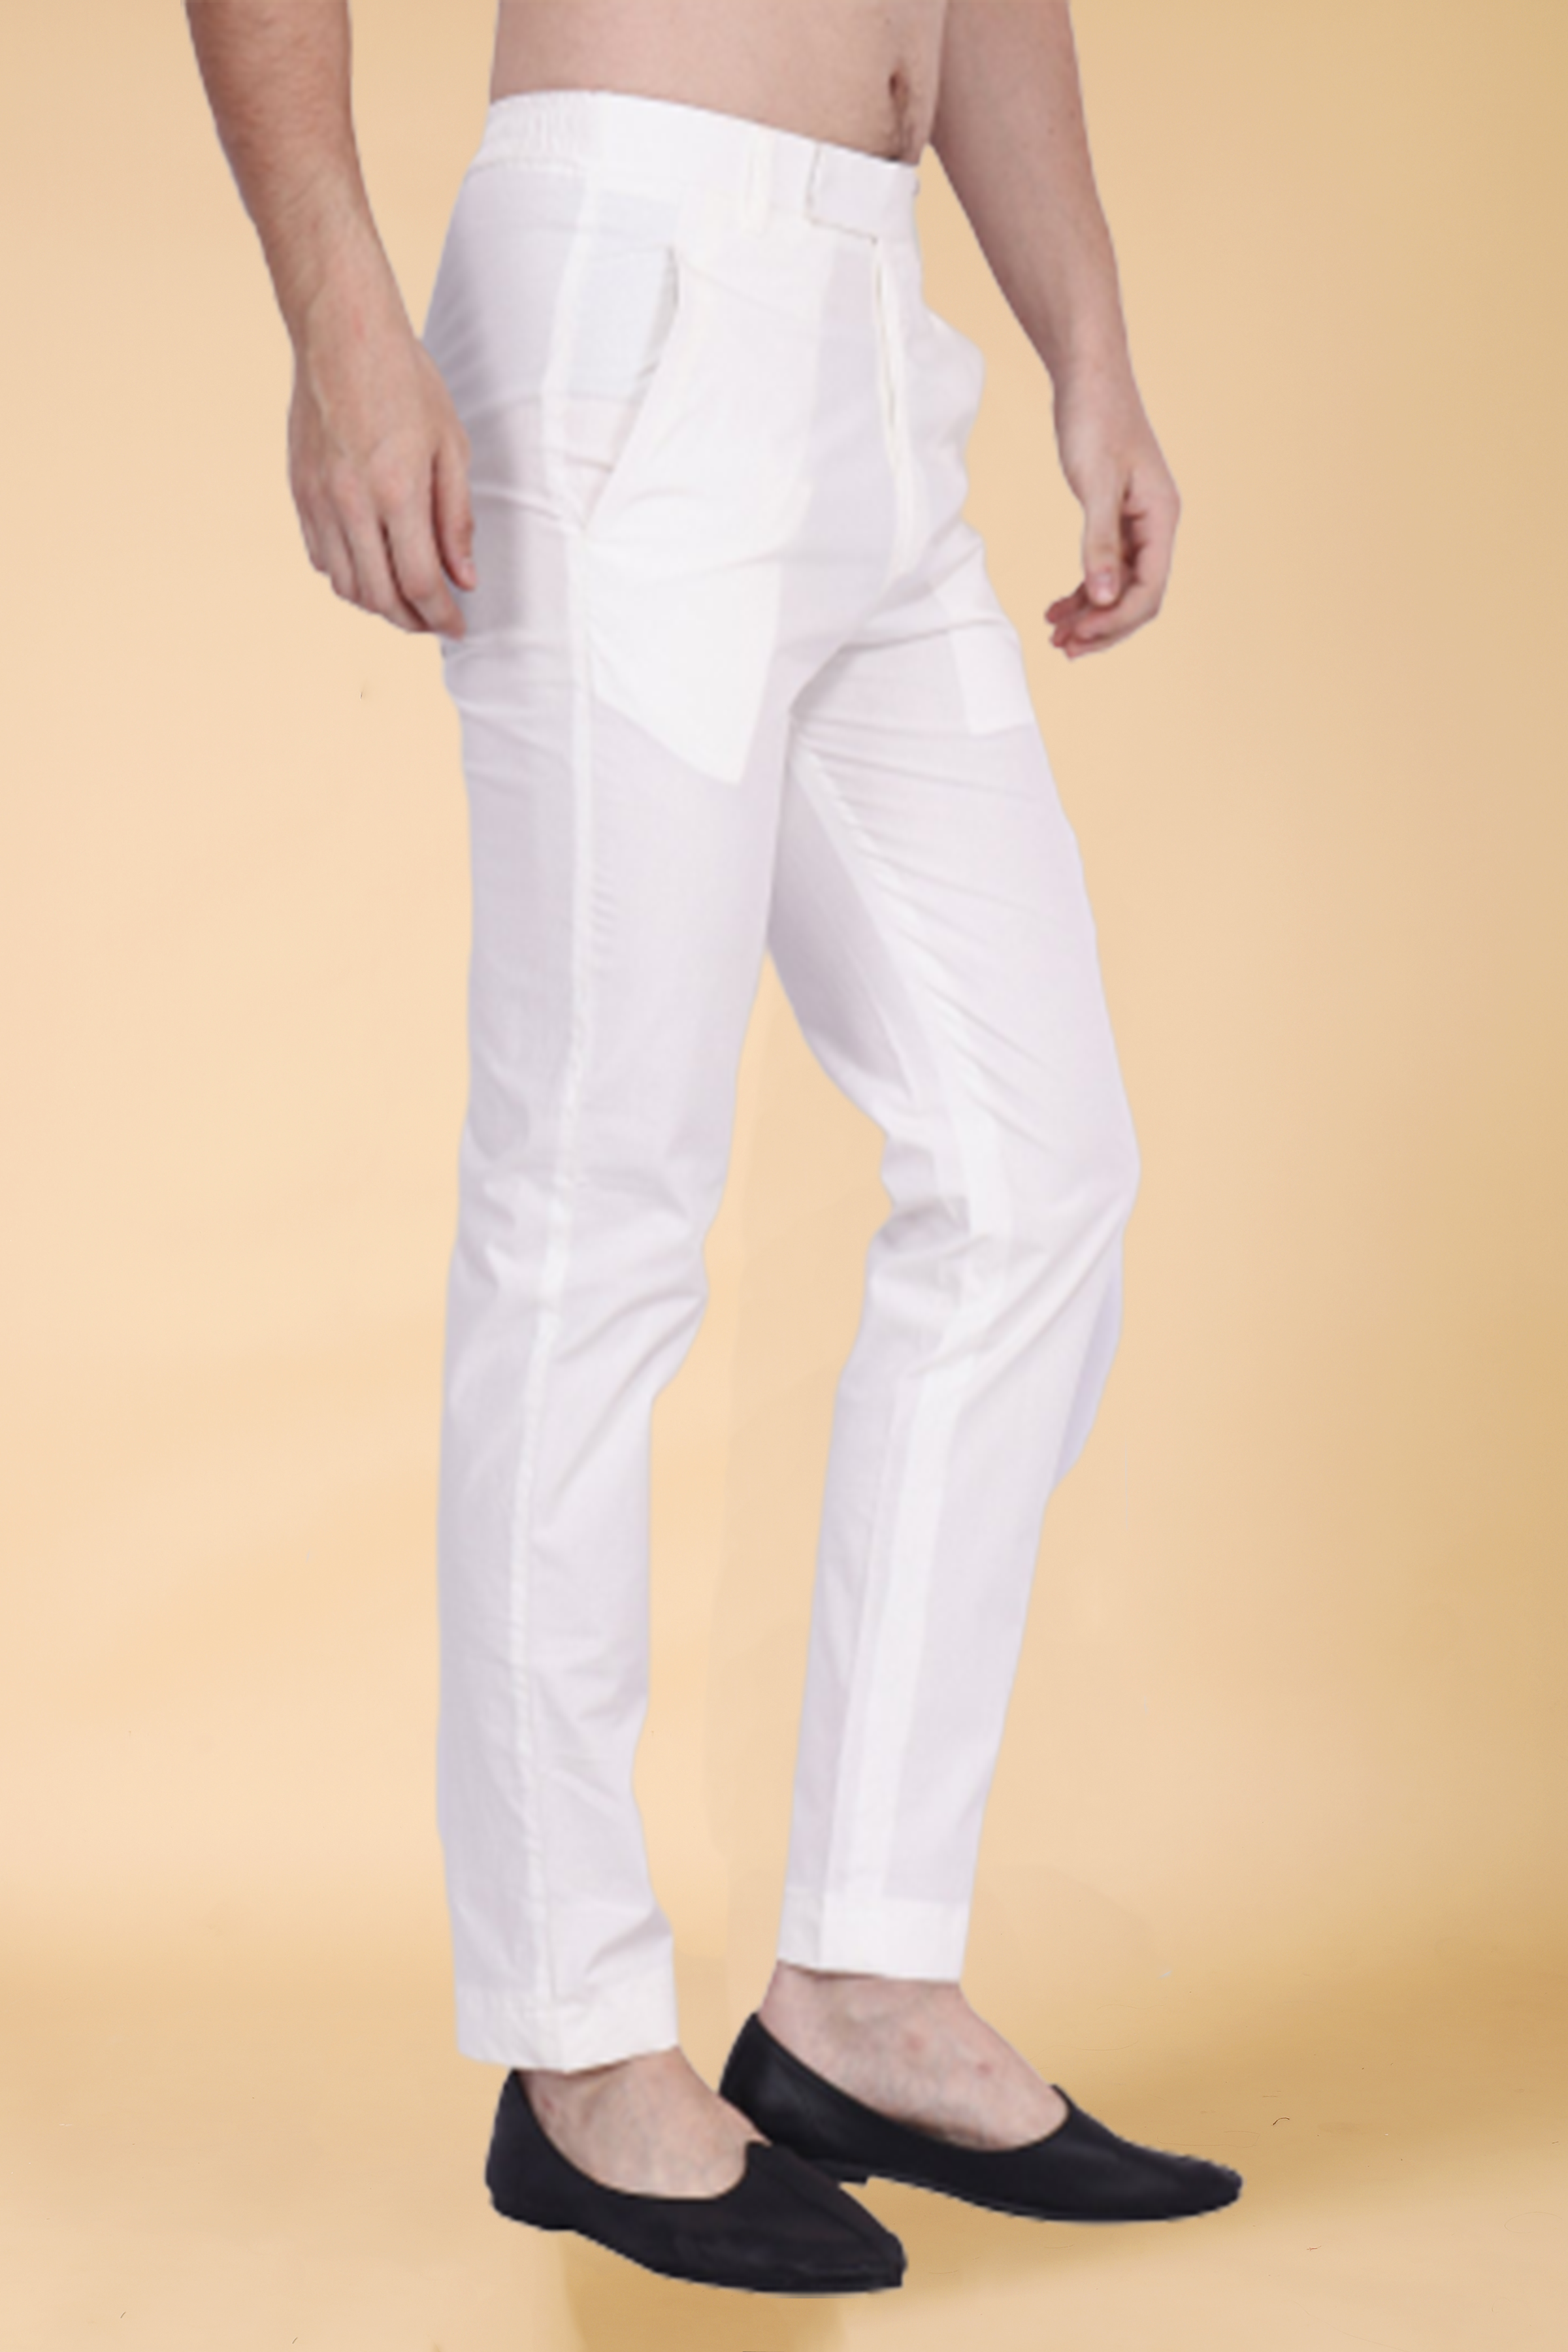 Buy Plus Size White Pyjama Online  Plus Size Men Pyjamas  Apella